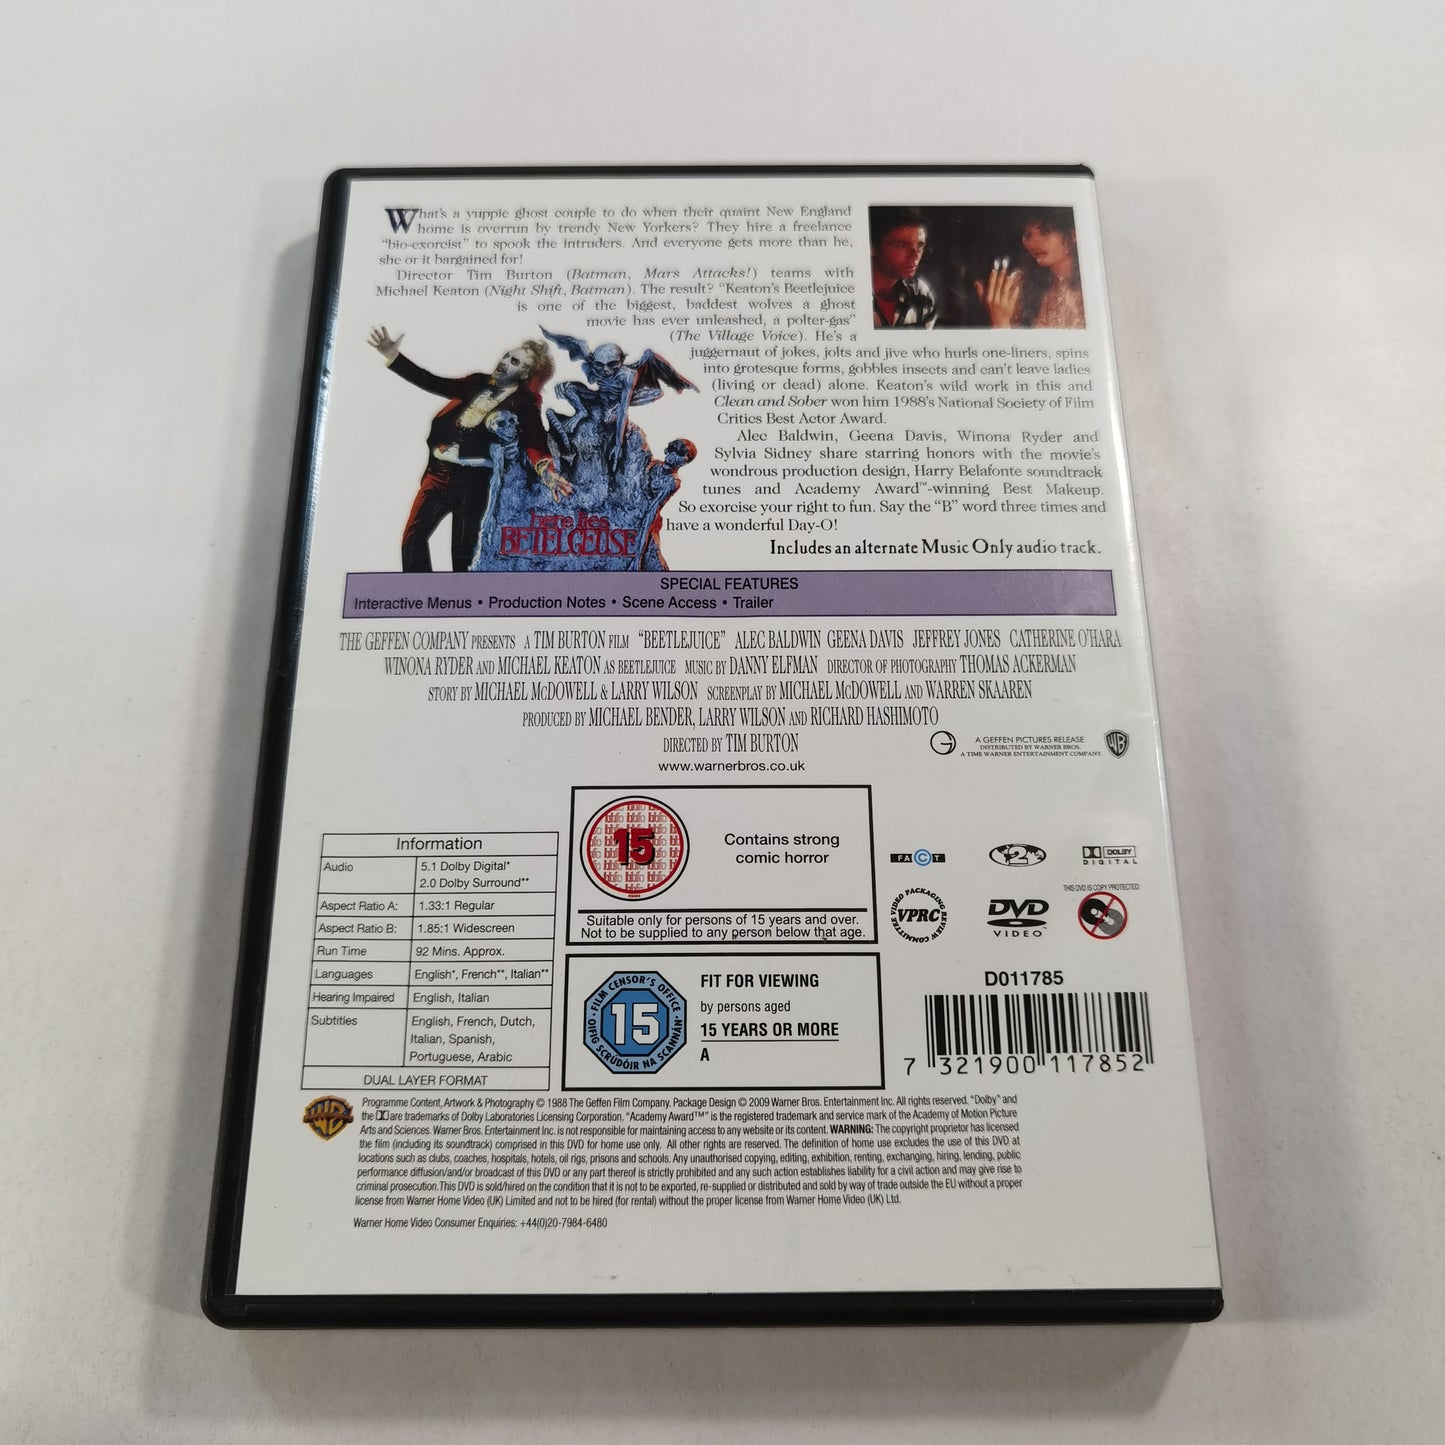 Beetlejuice (1988) - DVD UK 2009